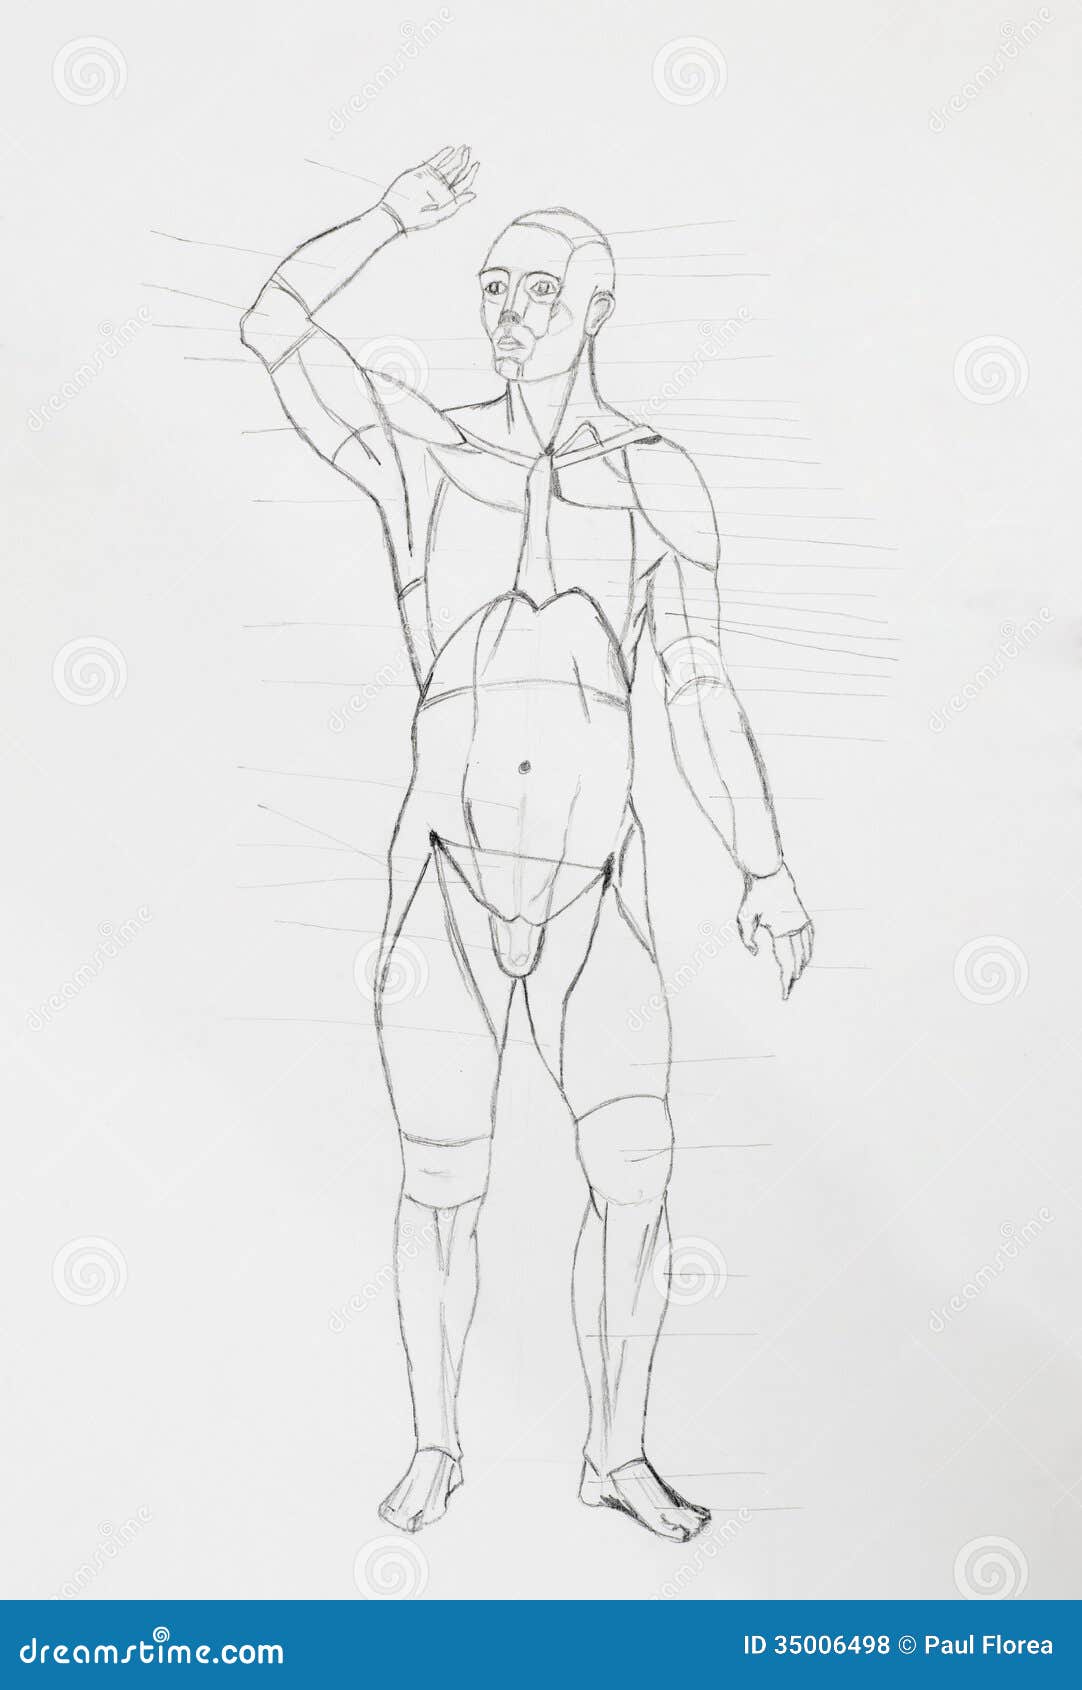 Human Front Body Pencil Drawing Royalty Free Stock Photos - Image: 35006498